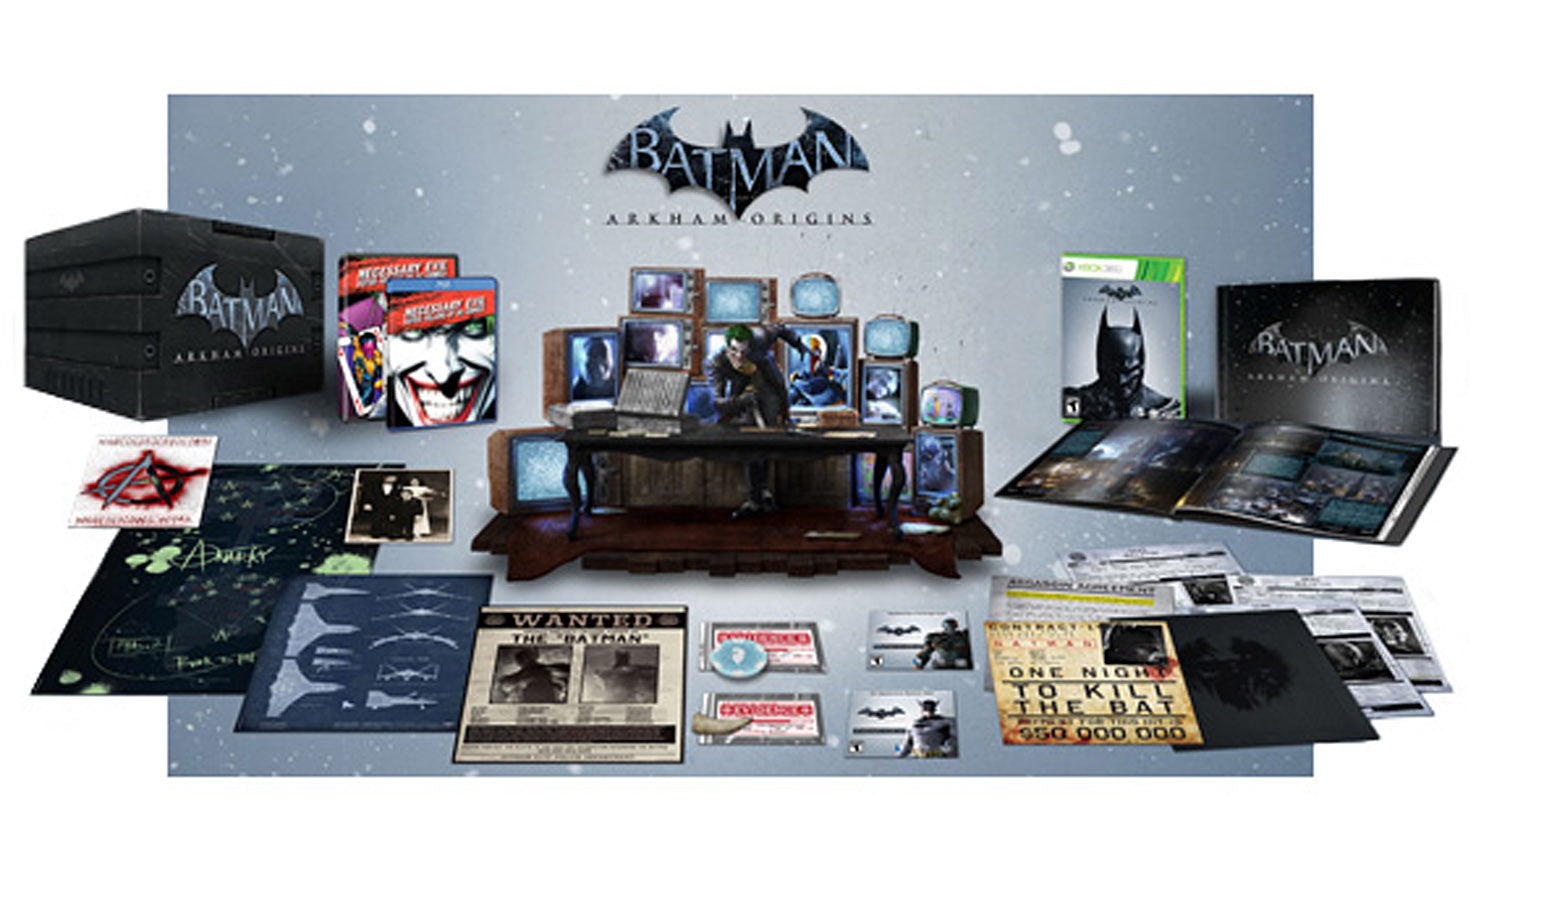 Batman - Arkham Origins (Collector's Edition) (XBOX360) on XBOX360 Game